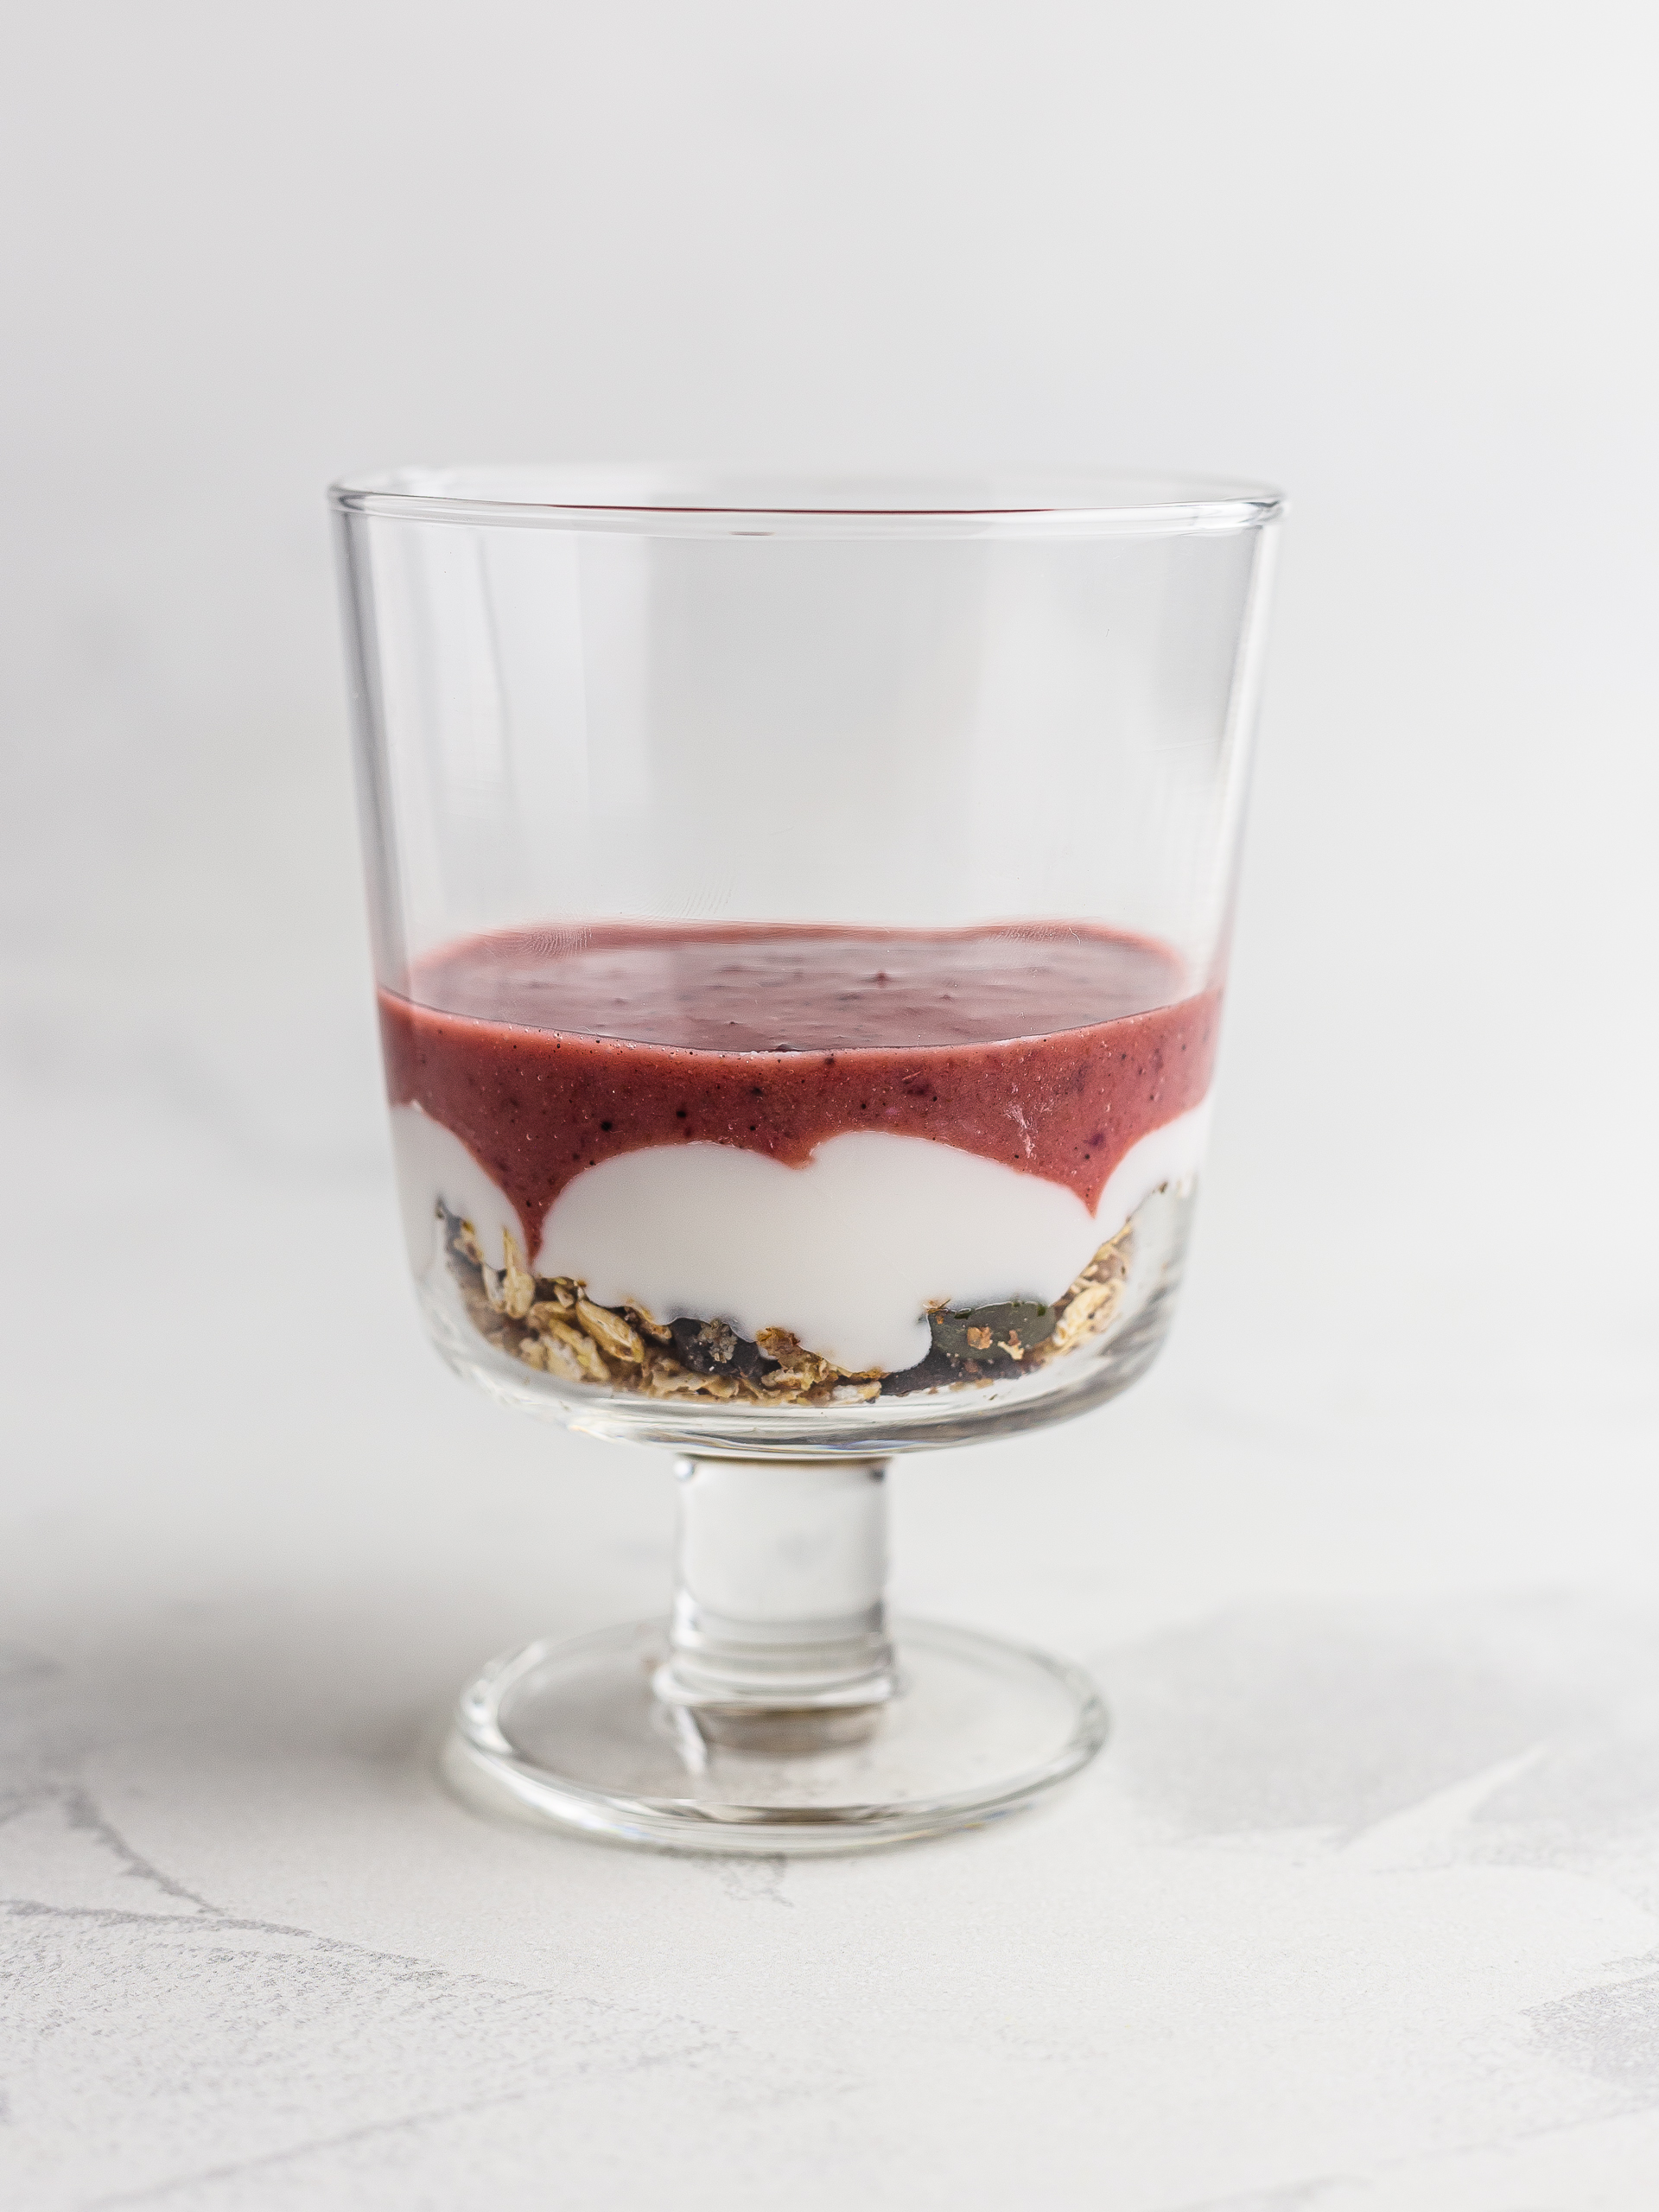 cherry parfait with yogurt layers in a glass